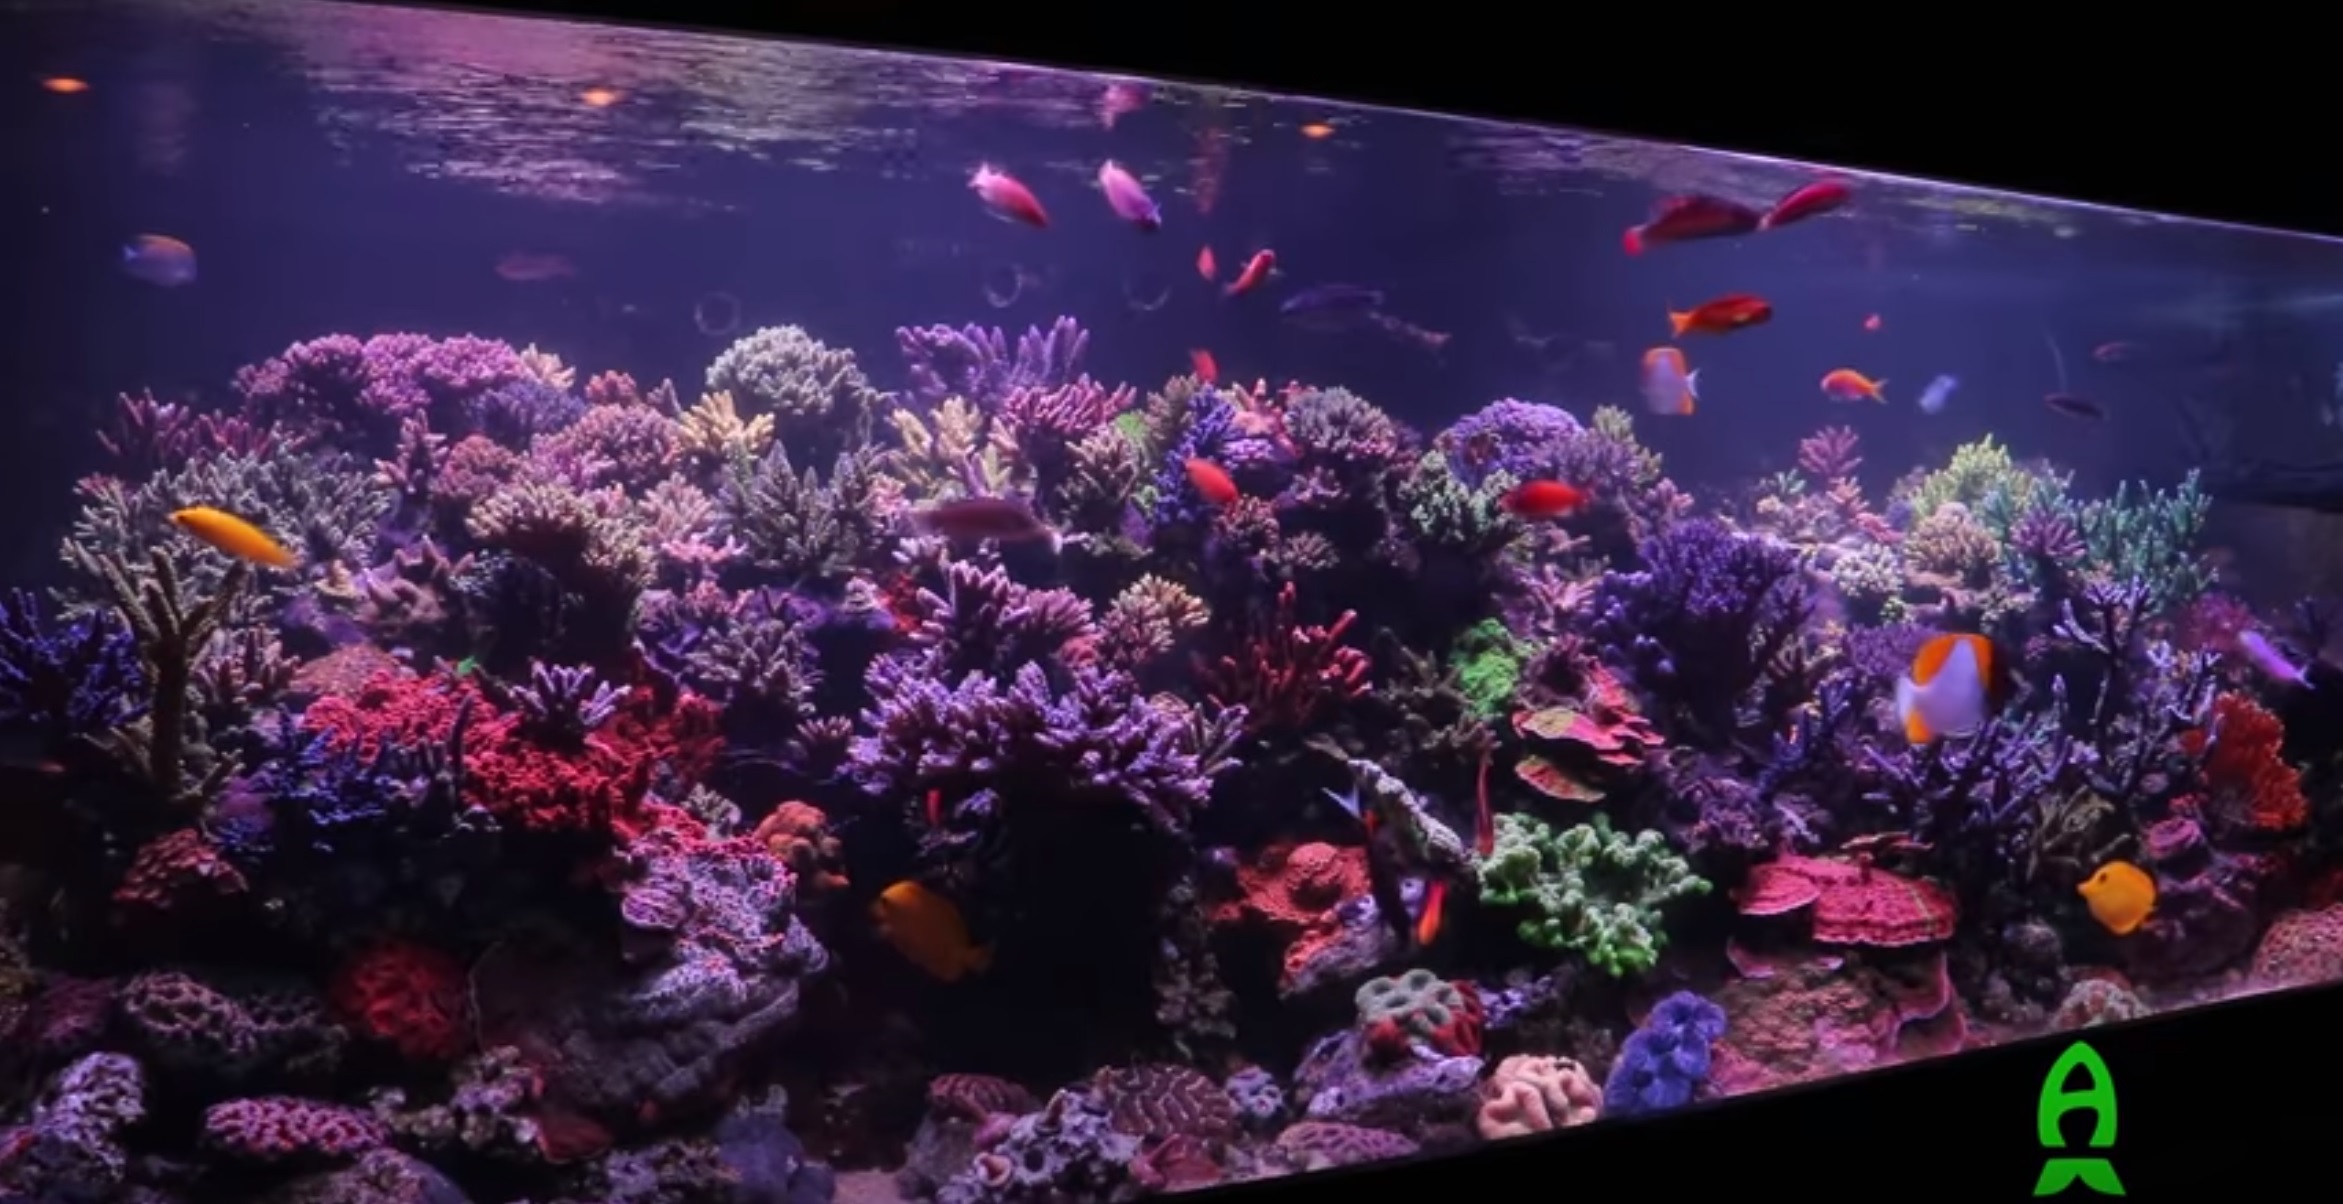 Reefs.com Re-visiting Jimmy Colson’s SPS Dominant Aquarium